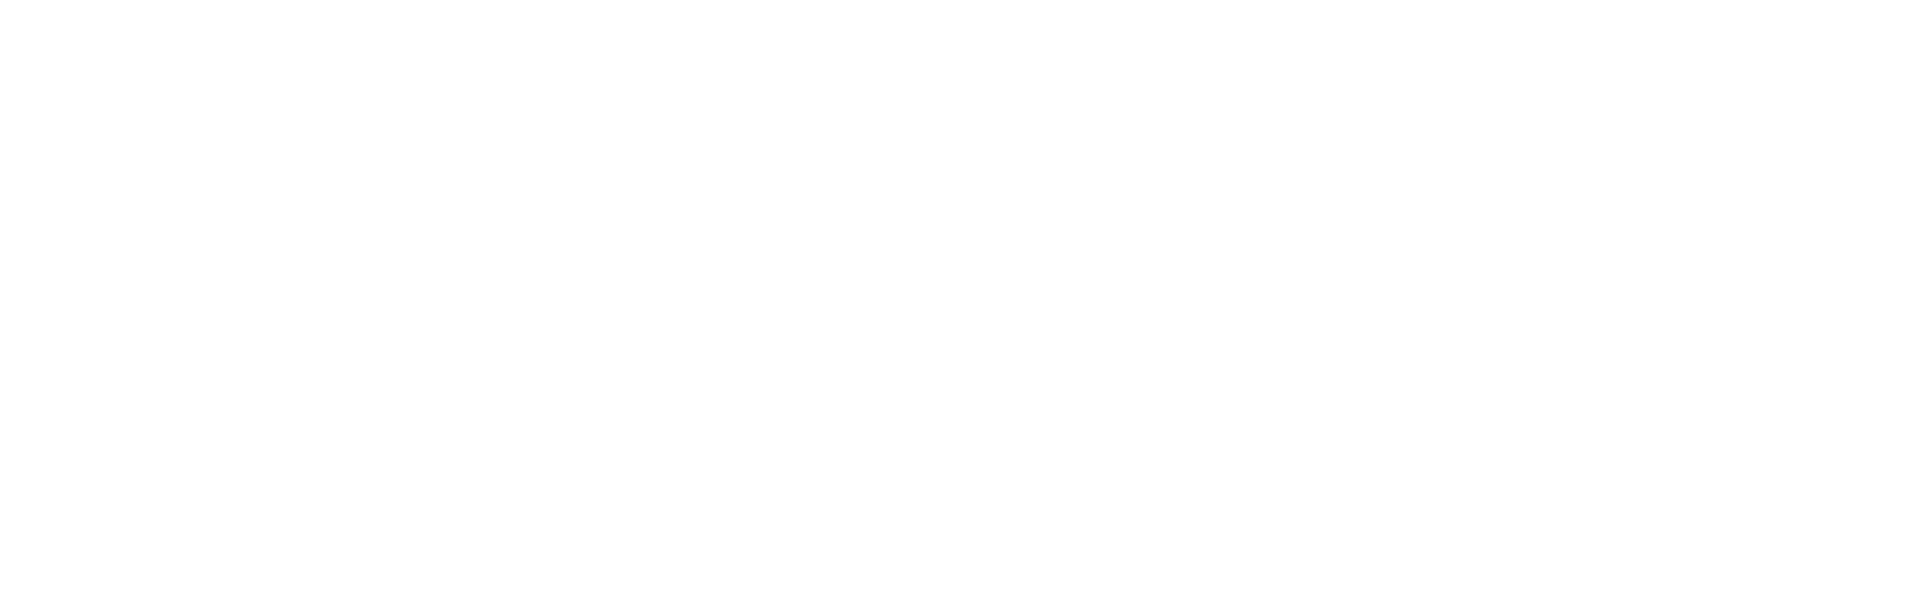 Brownlee fitness logo